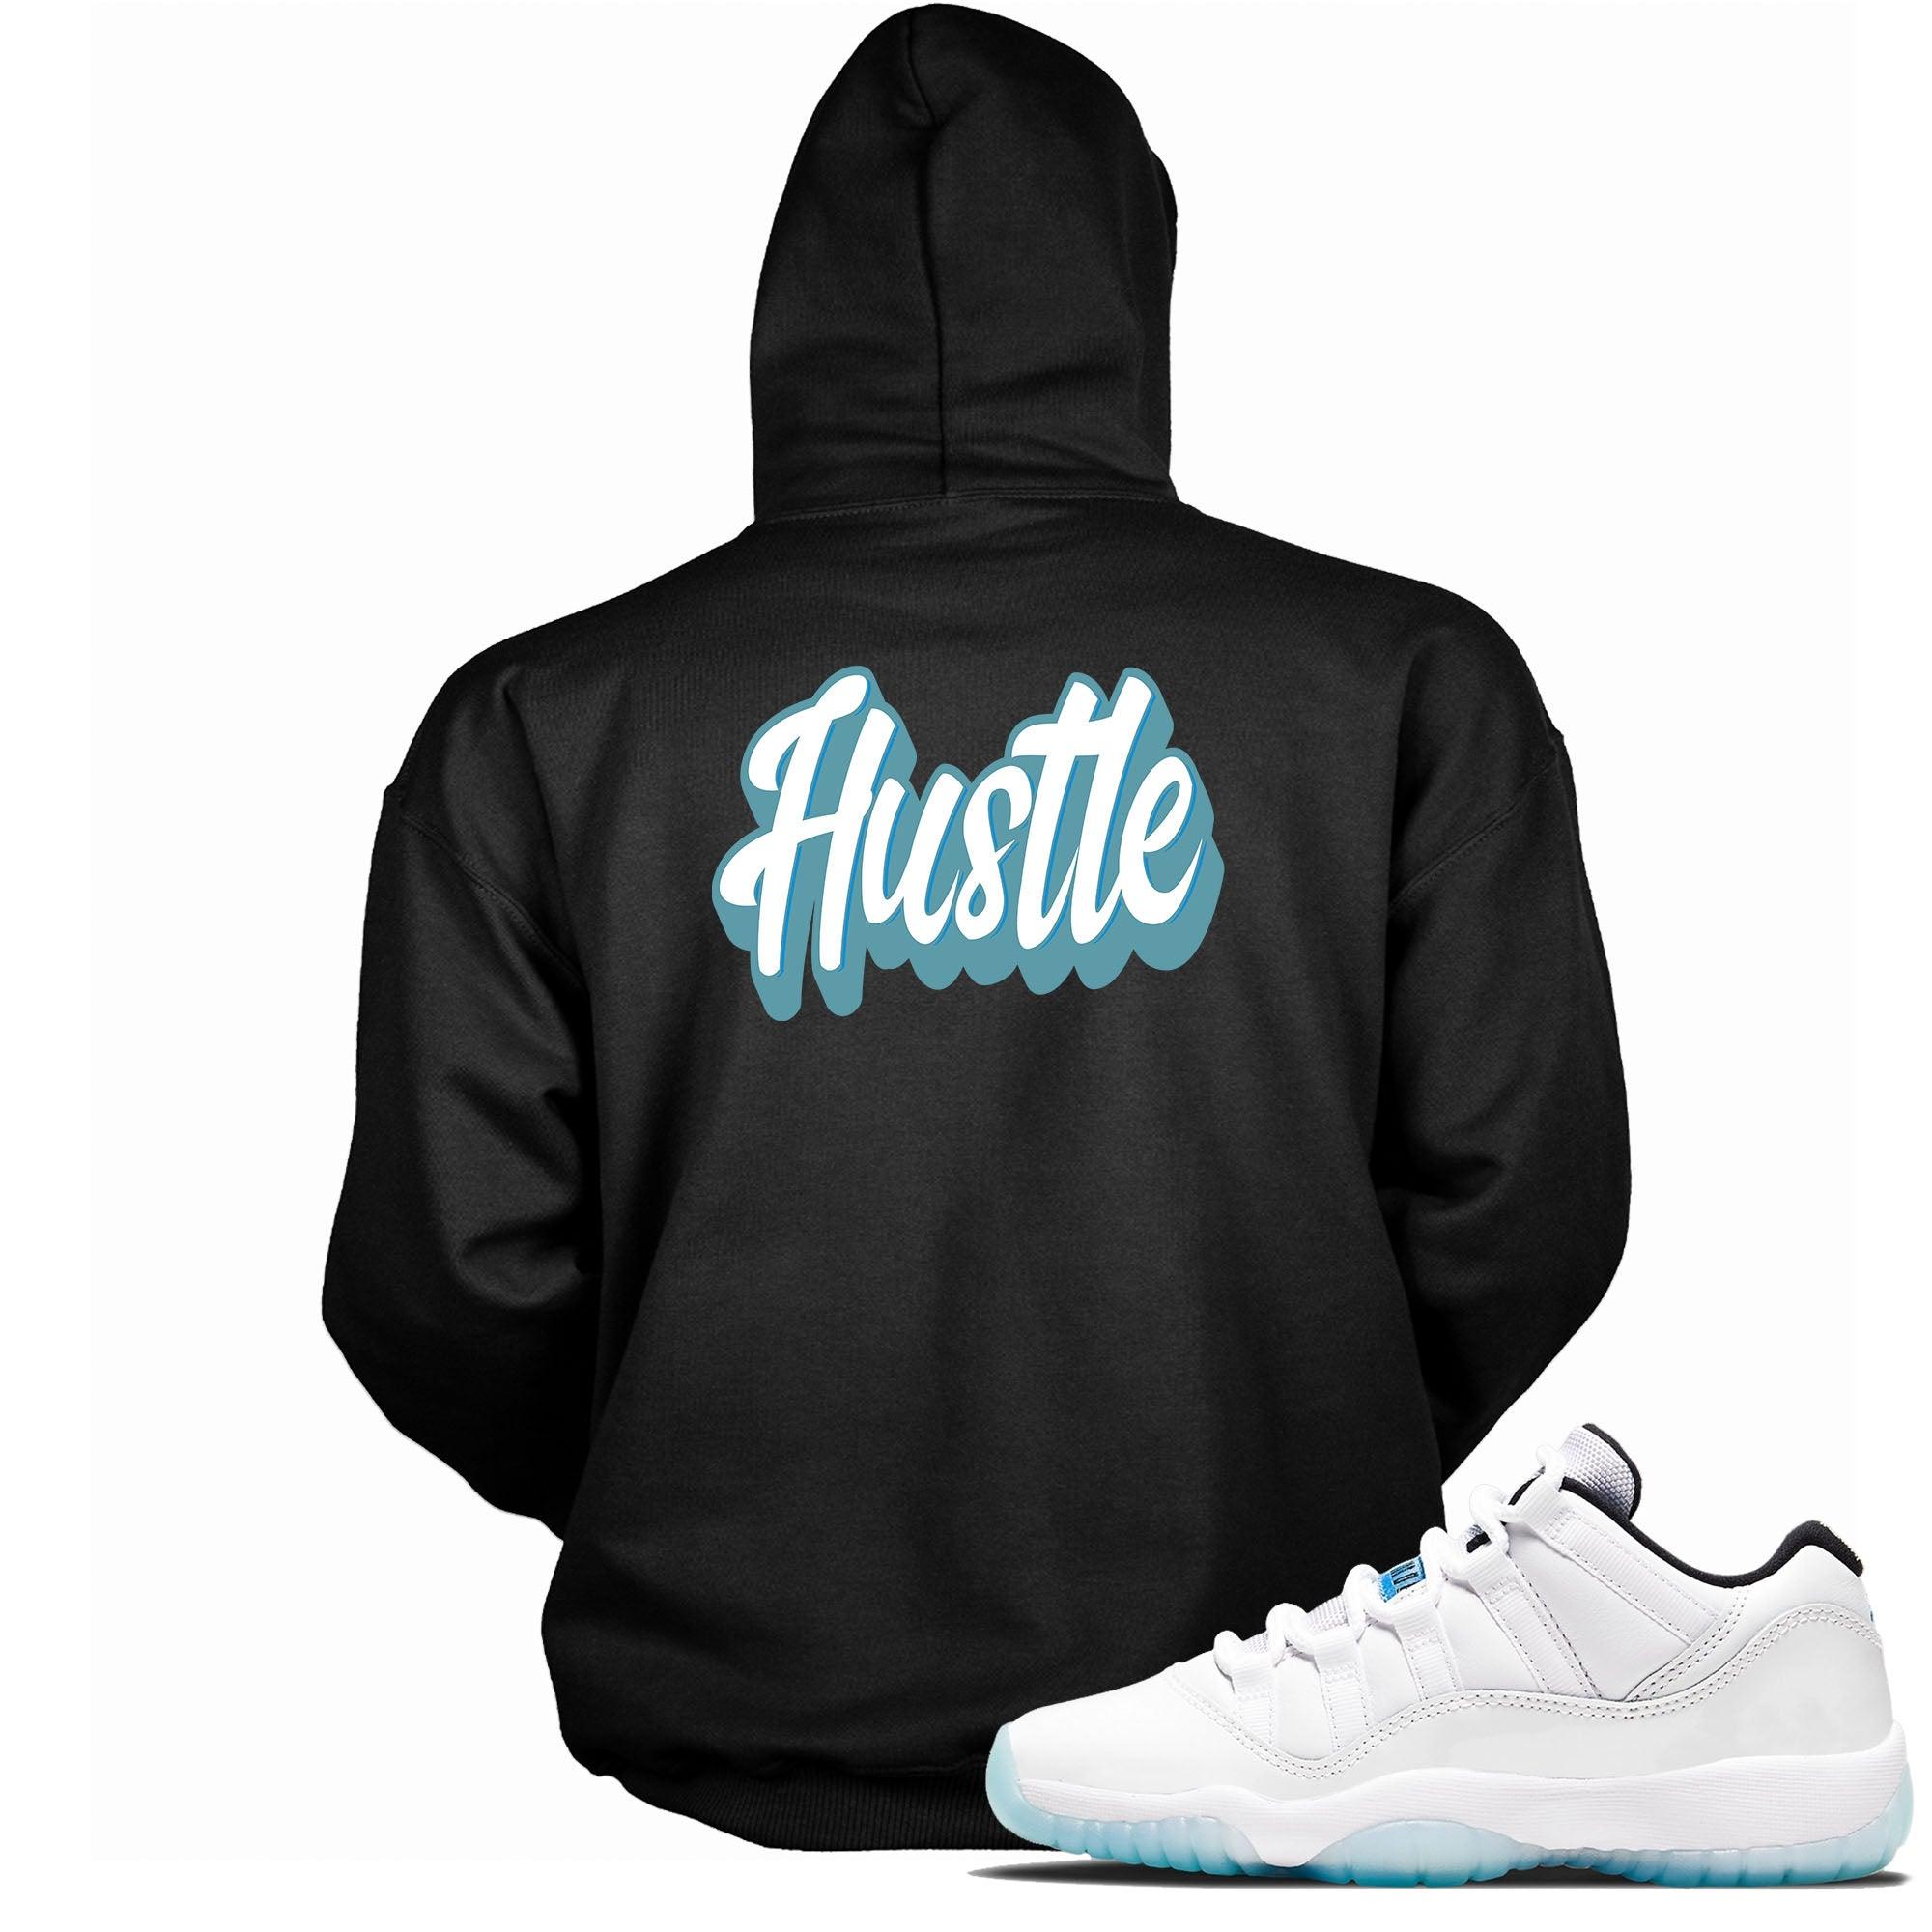 Black Hustle Hoodie AJ 11s Retro Low Legend Blue photo